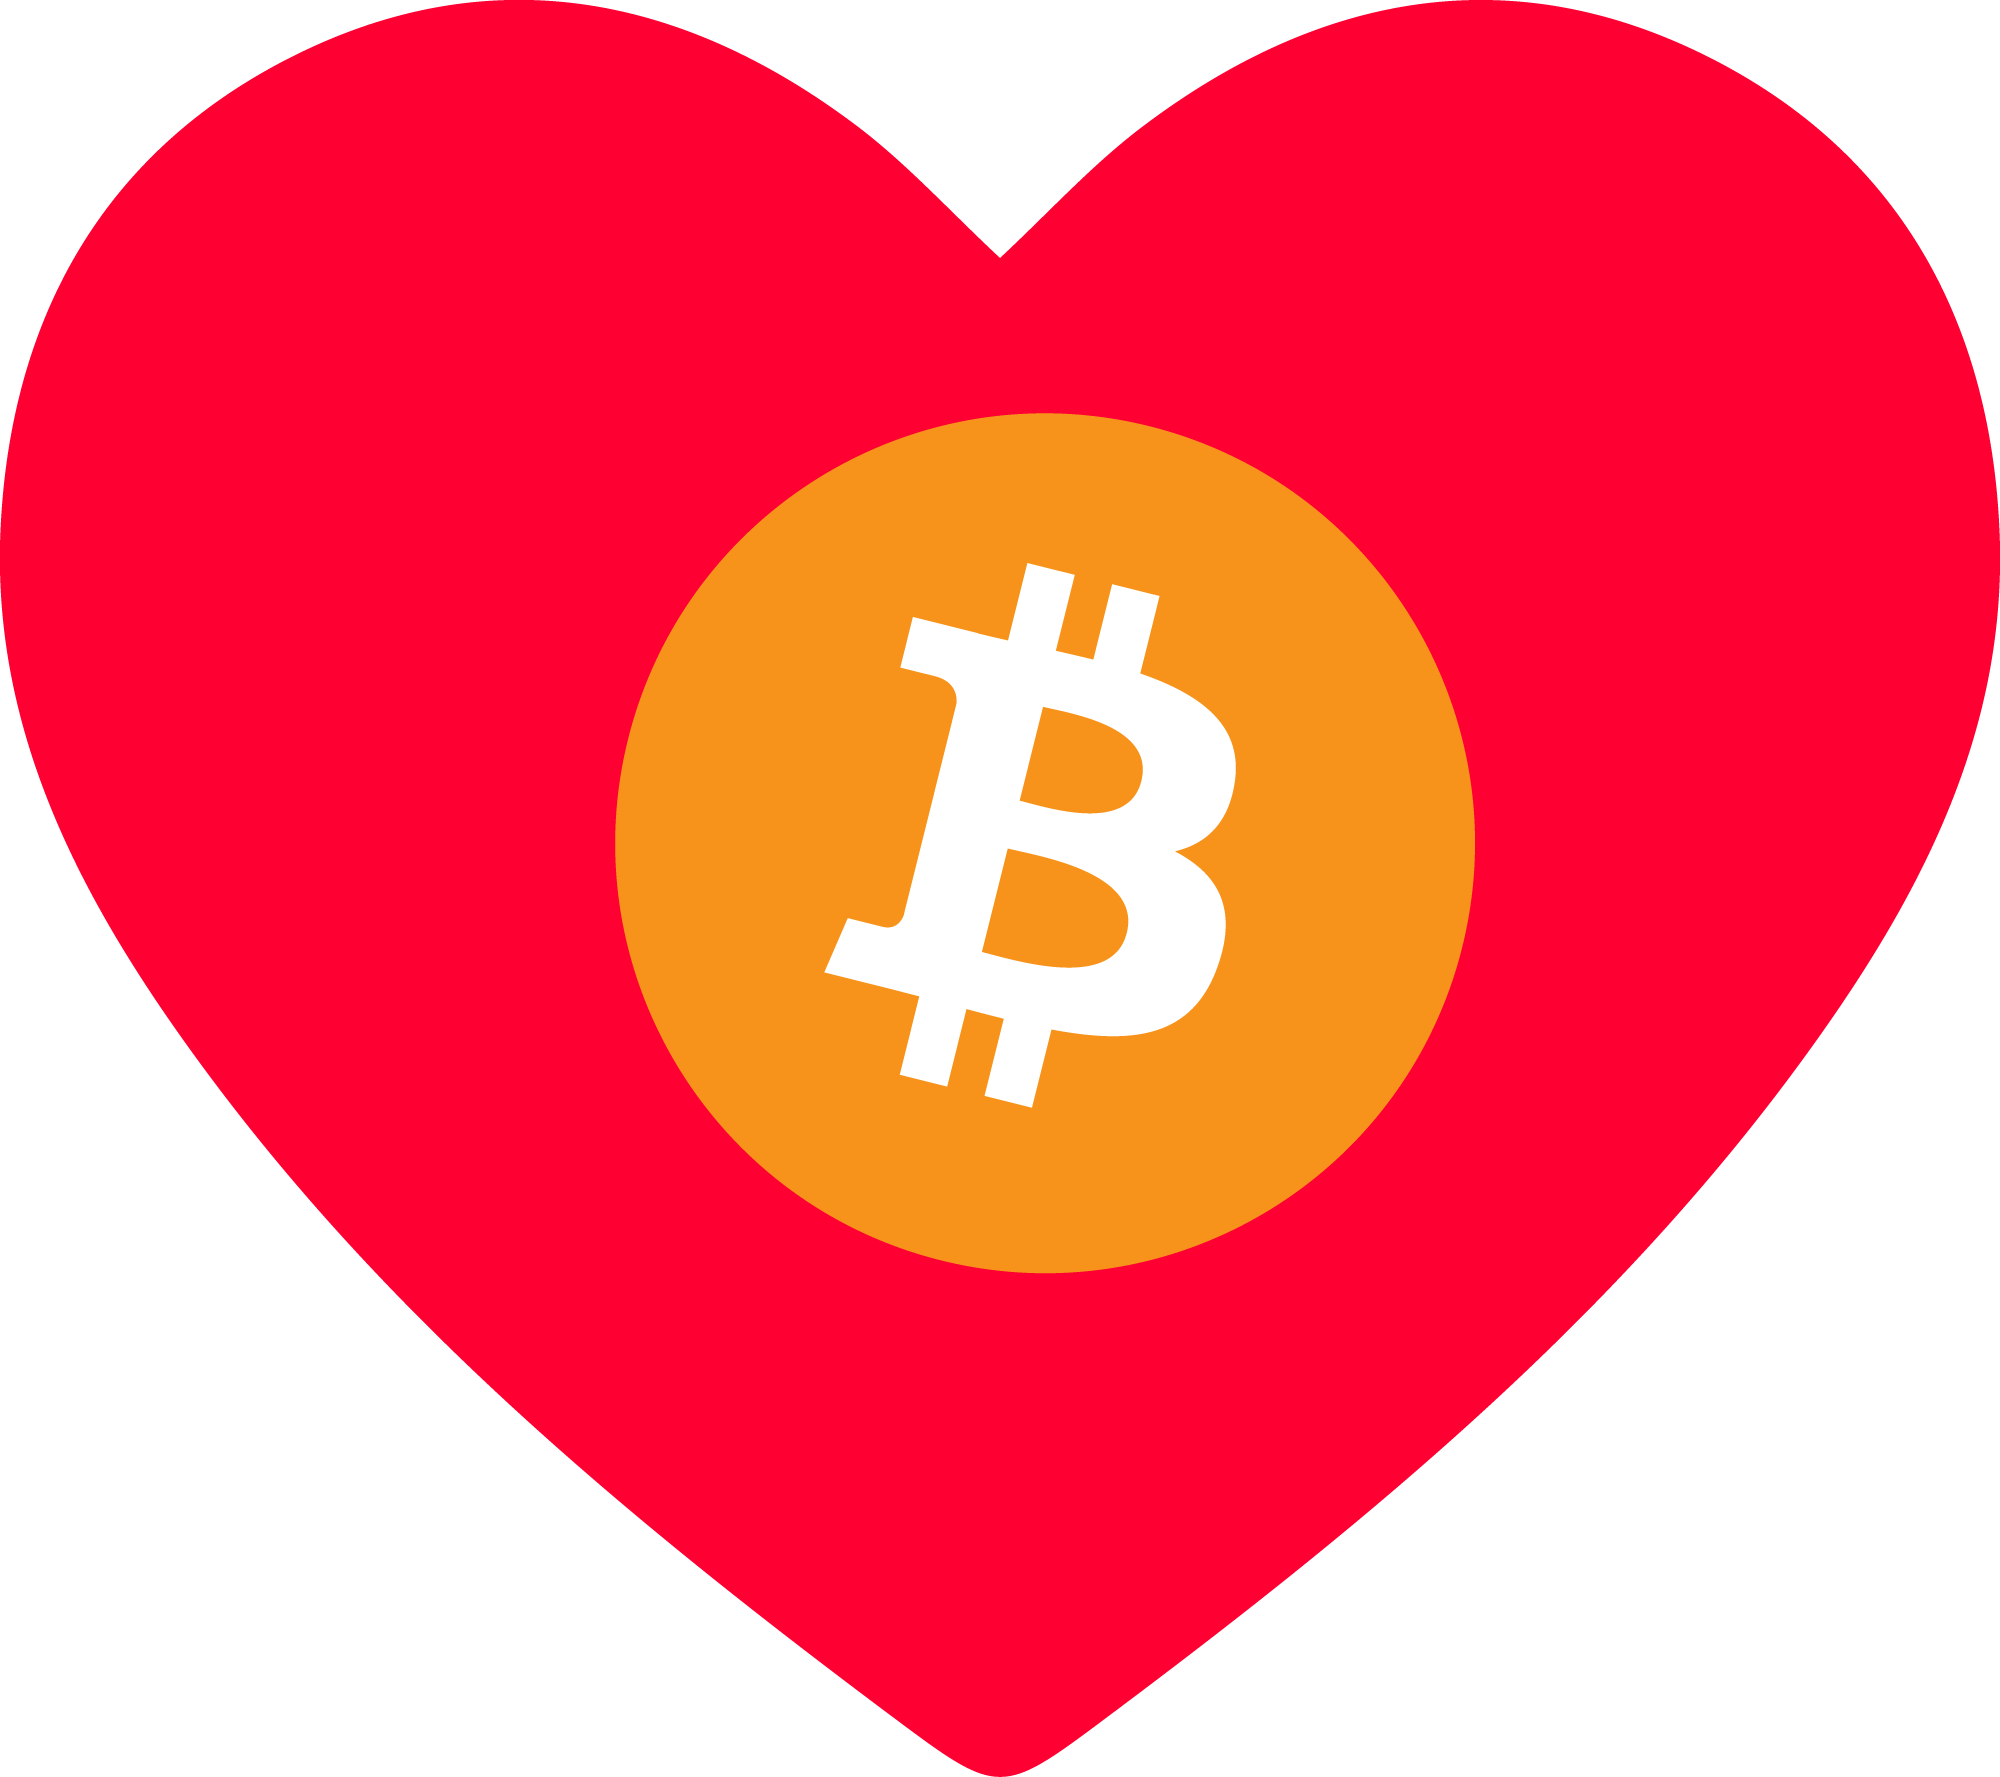 Bitcoin Heart | The Giving Block